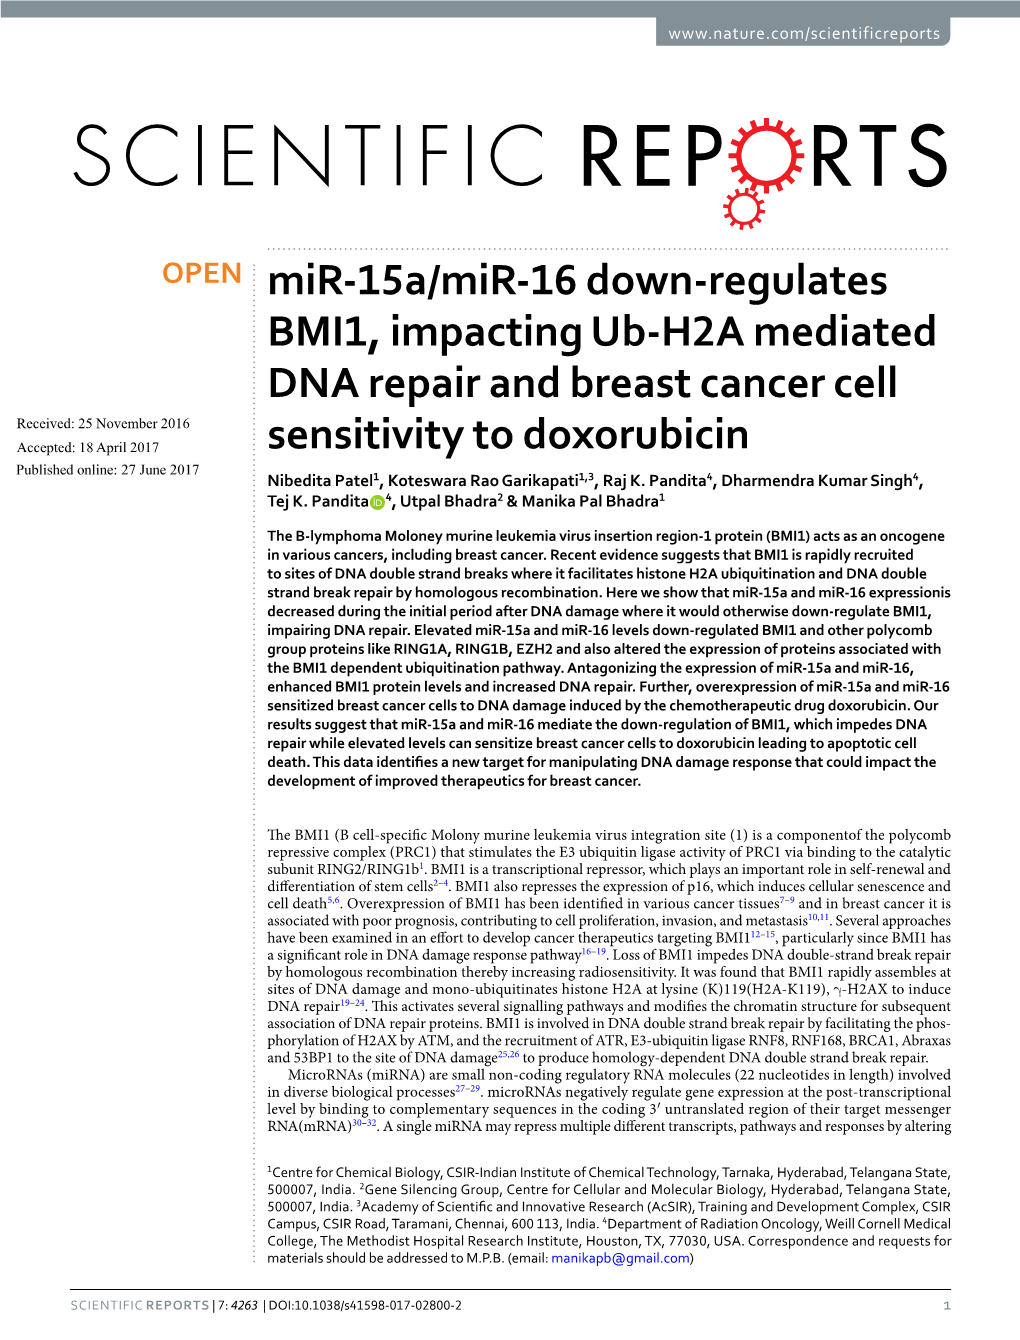 Mir-15A/Mir-16 Down-Regulates BMI1, Impacting Ub-H2A Mediated DNA